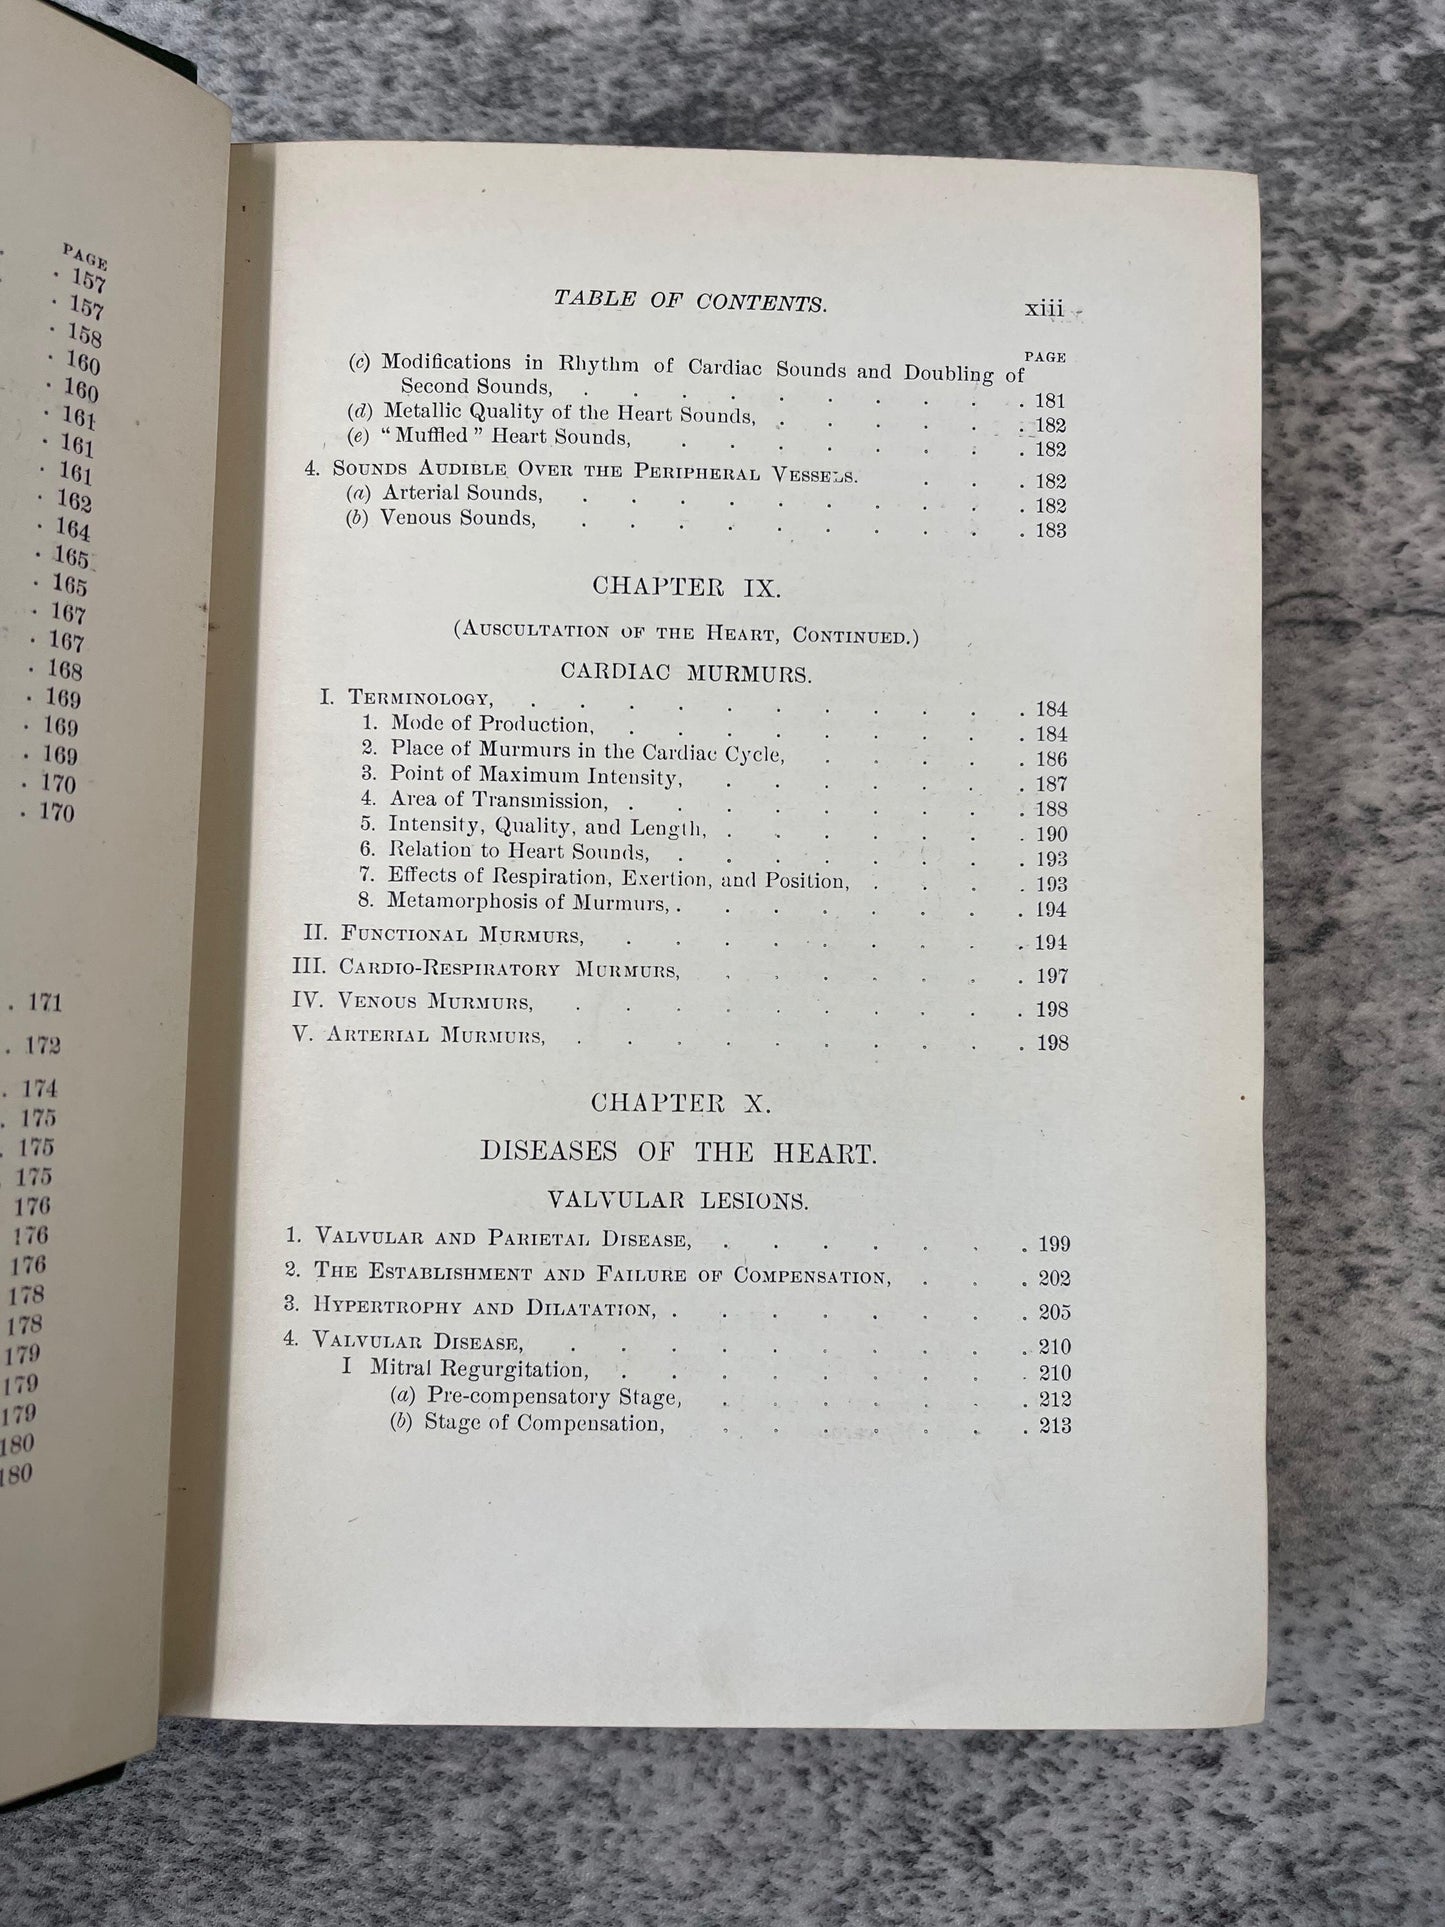 Physical Diagnosis / Ex-Library, Fourth Edition / 1910 - Precious Cache